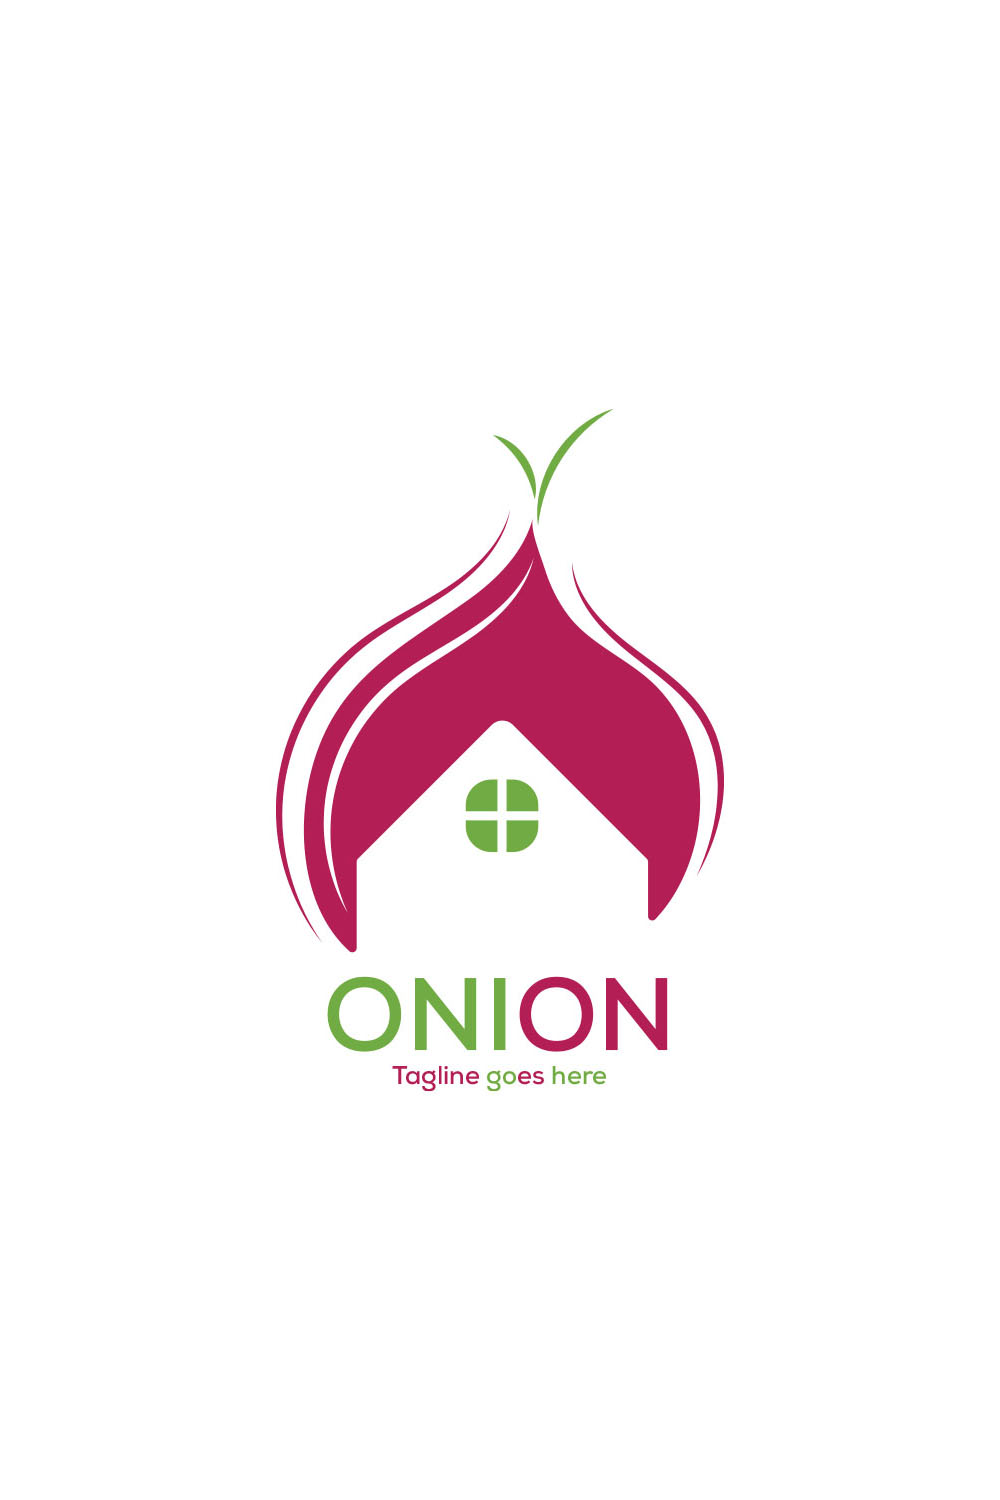 Creative and Unique Onion Logo Design Pinterest collage image.